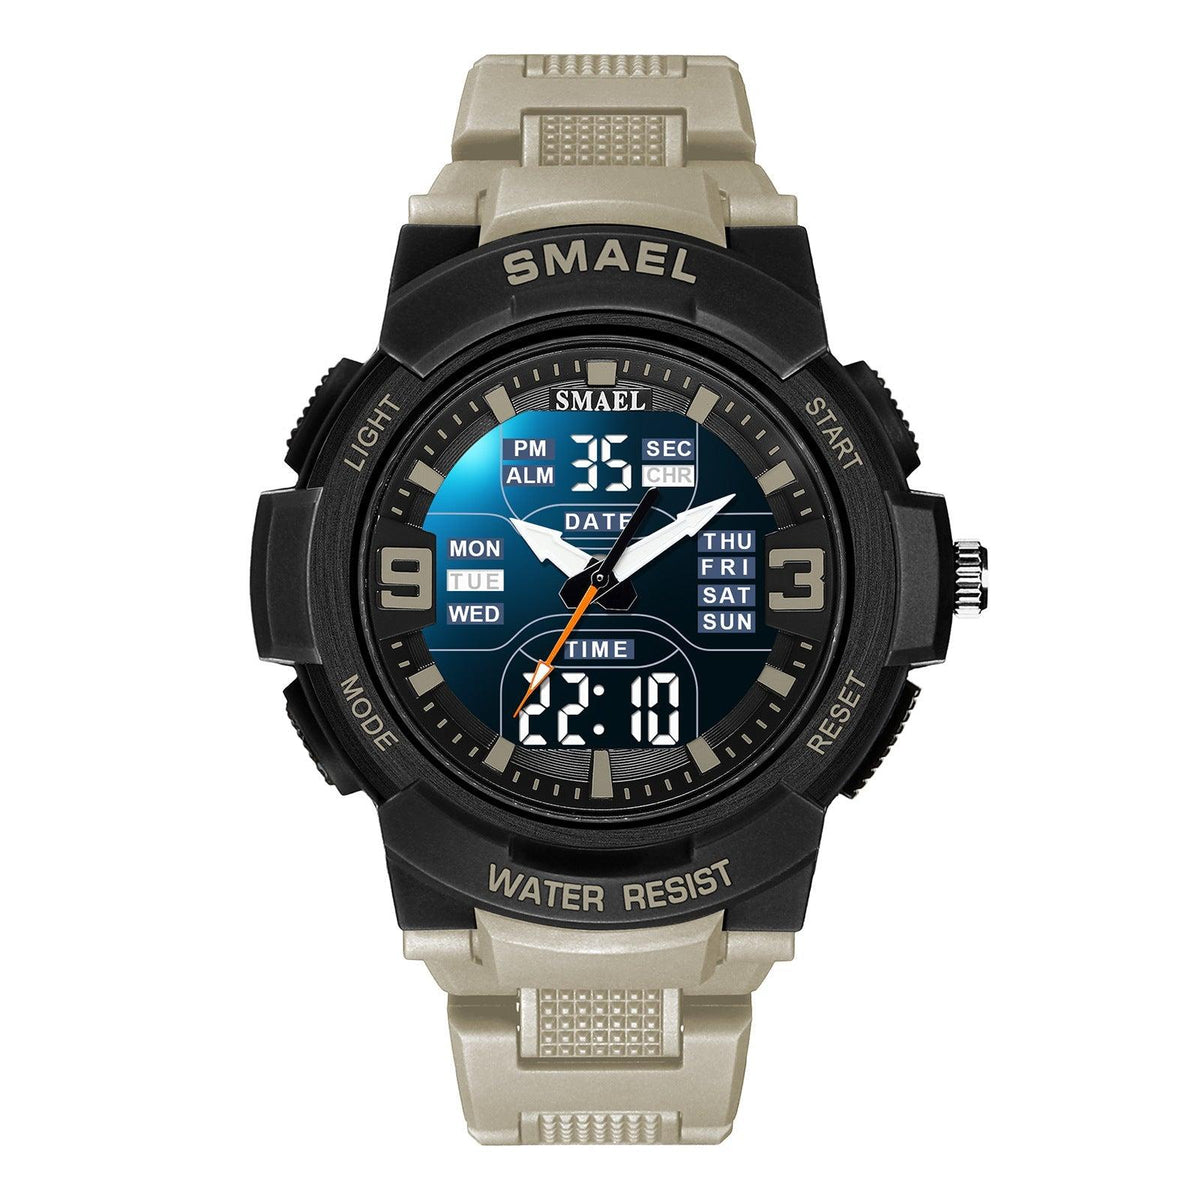 SMAEL 1912 Analog Digital Multifunctional Waterproof Electronic Watch For Men